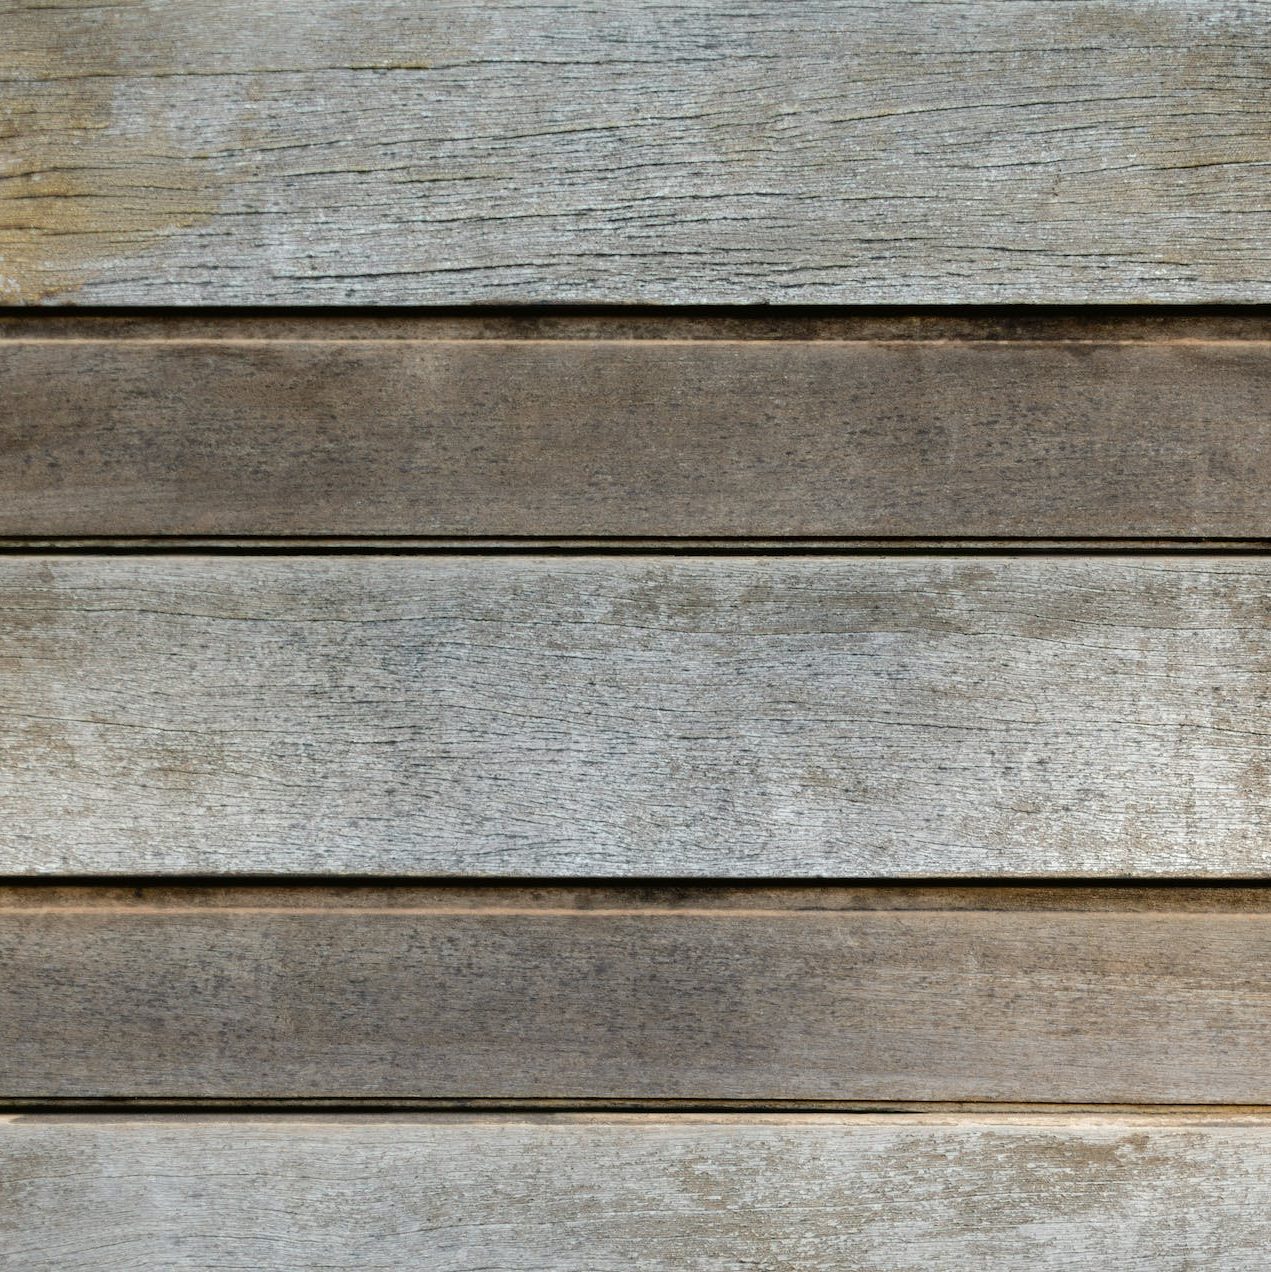 Close-Up Photo of Wood Panels